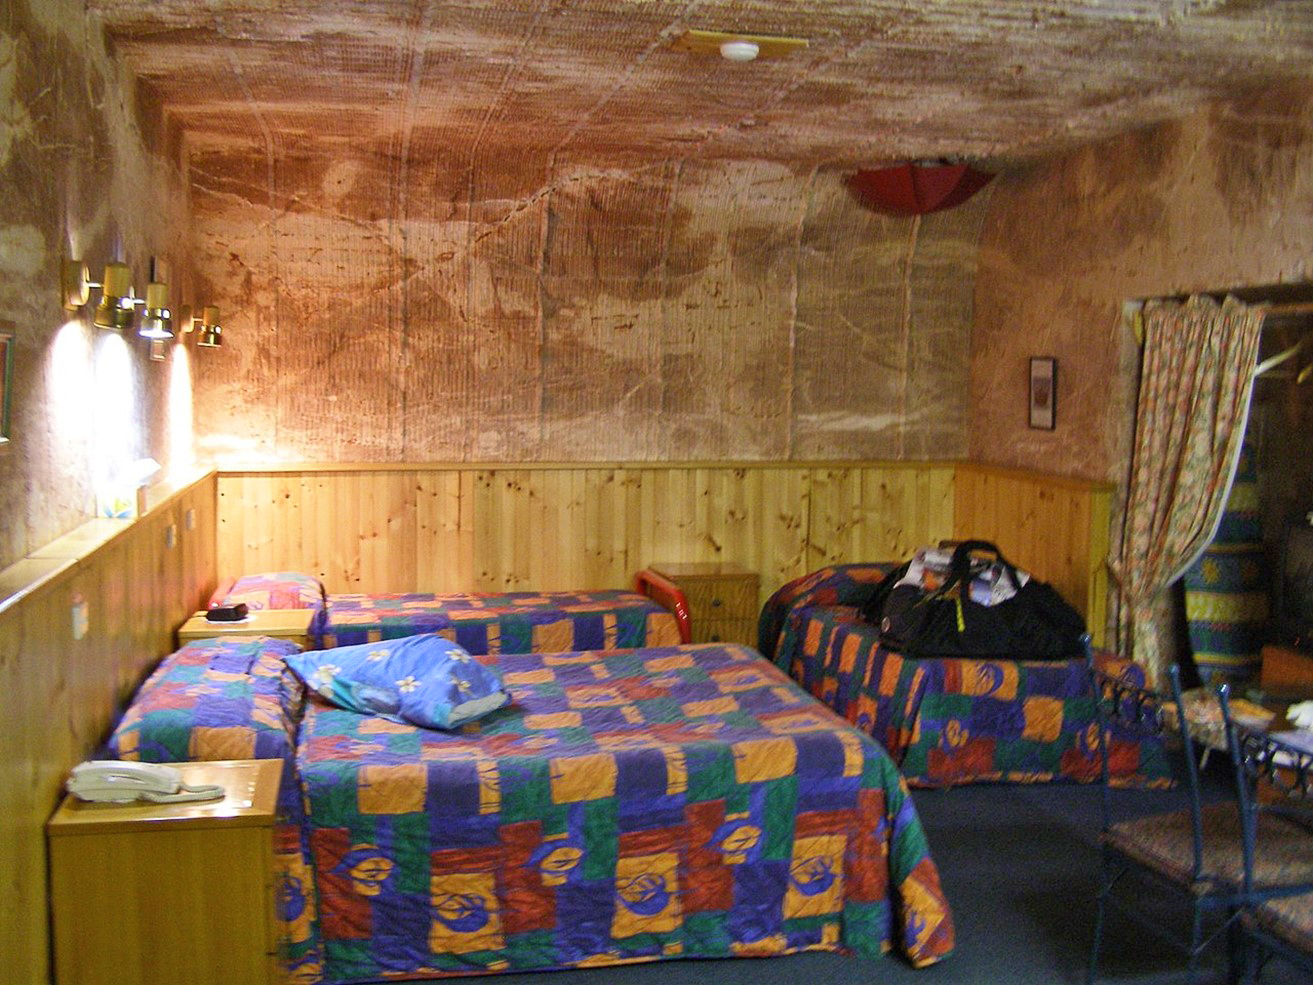 Interior of underground motel room